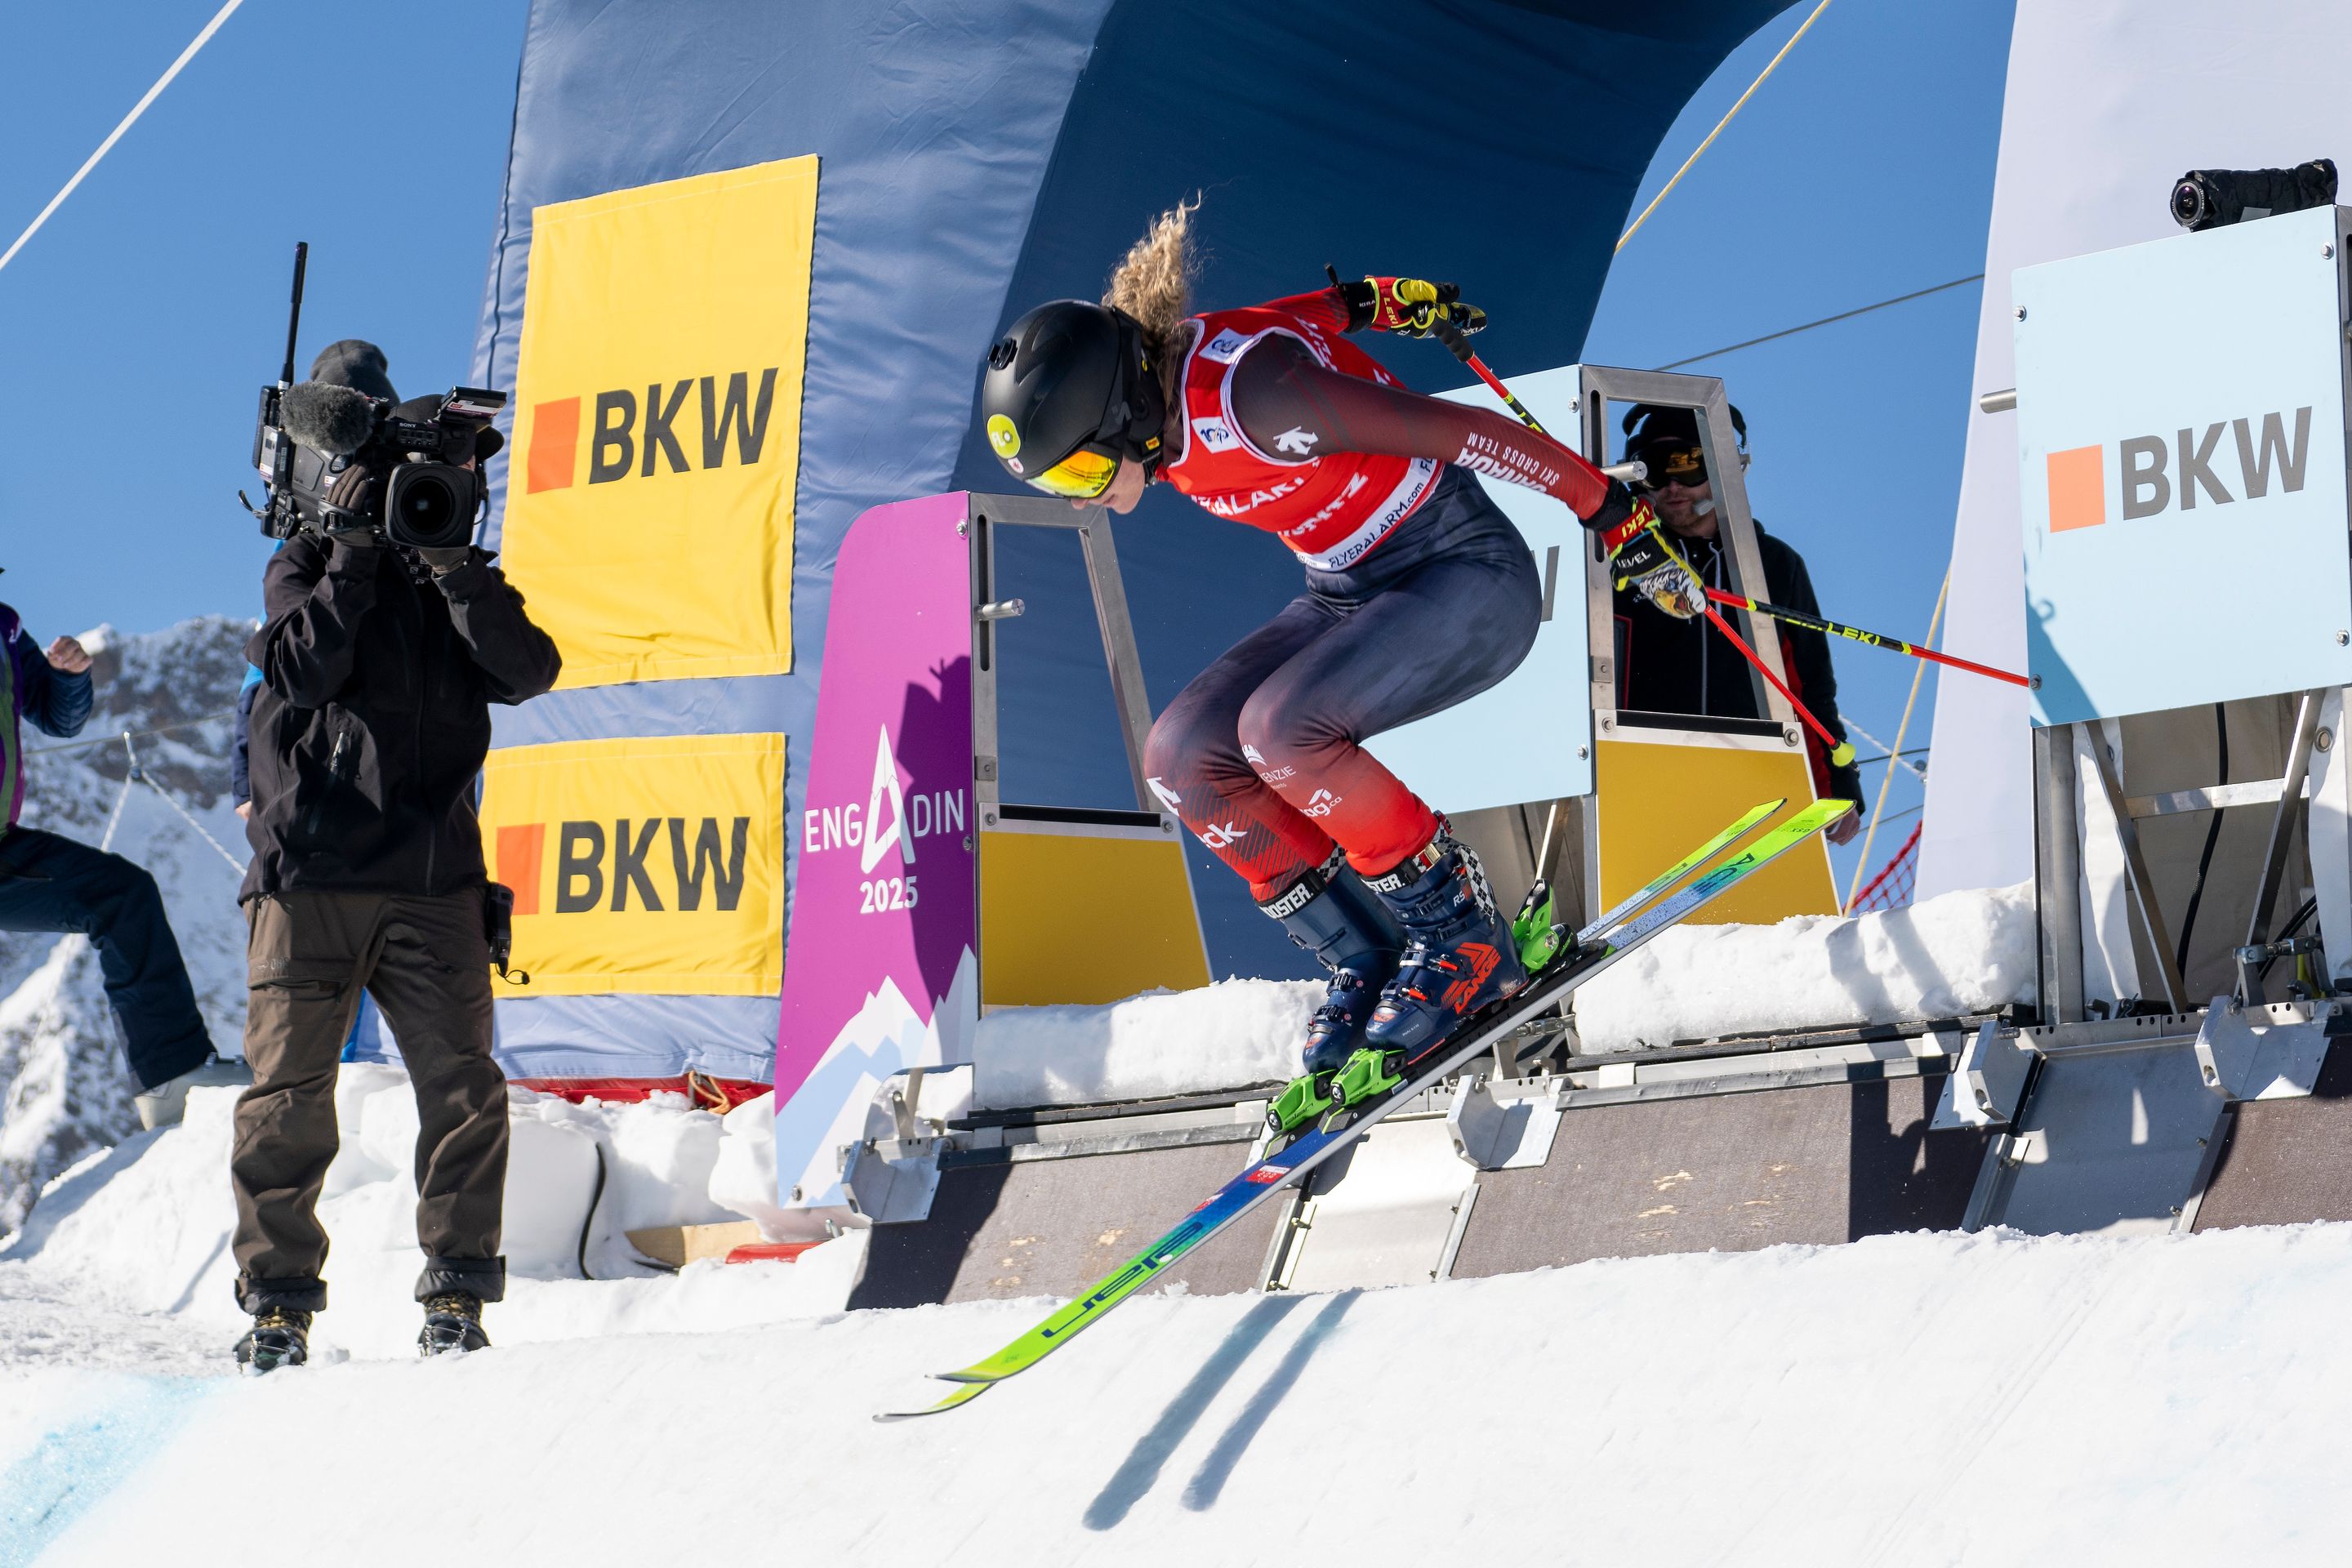 Hannah Schmidt is the women's frontrunner in this season's FIS Ski Cross World Cup (GEPA)